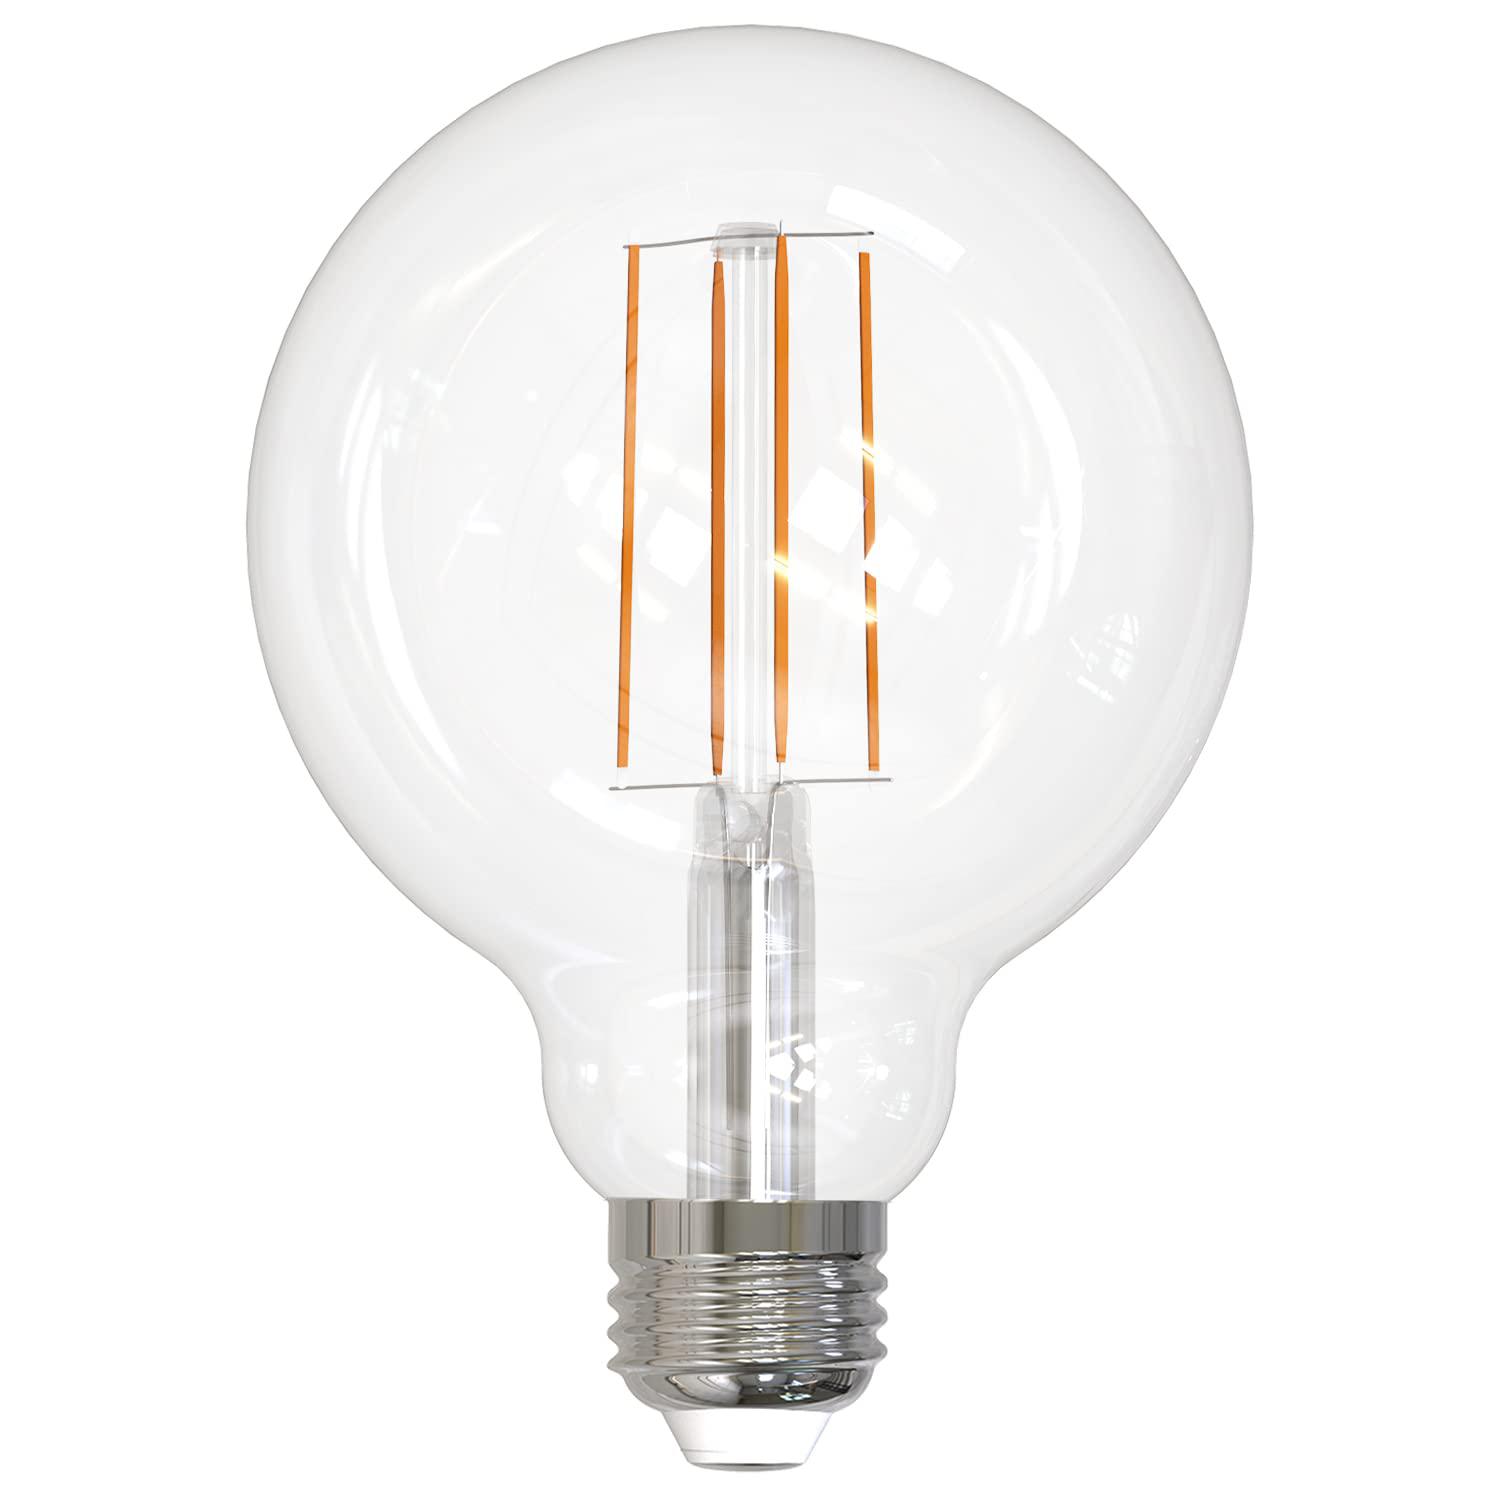 sunlite 81099 led g30 edison globe light bulb, 8.5 watts (100w equivalent), standard e26 base, 800 lumens, dimmable, decorati